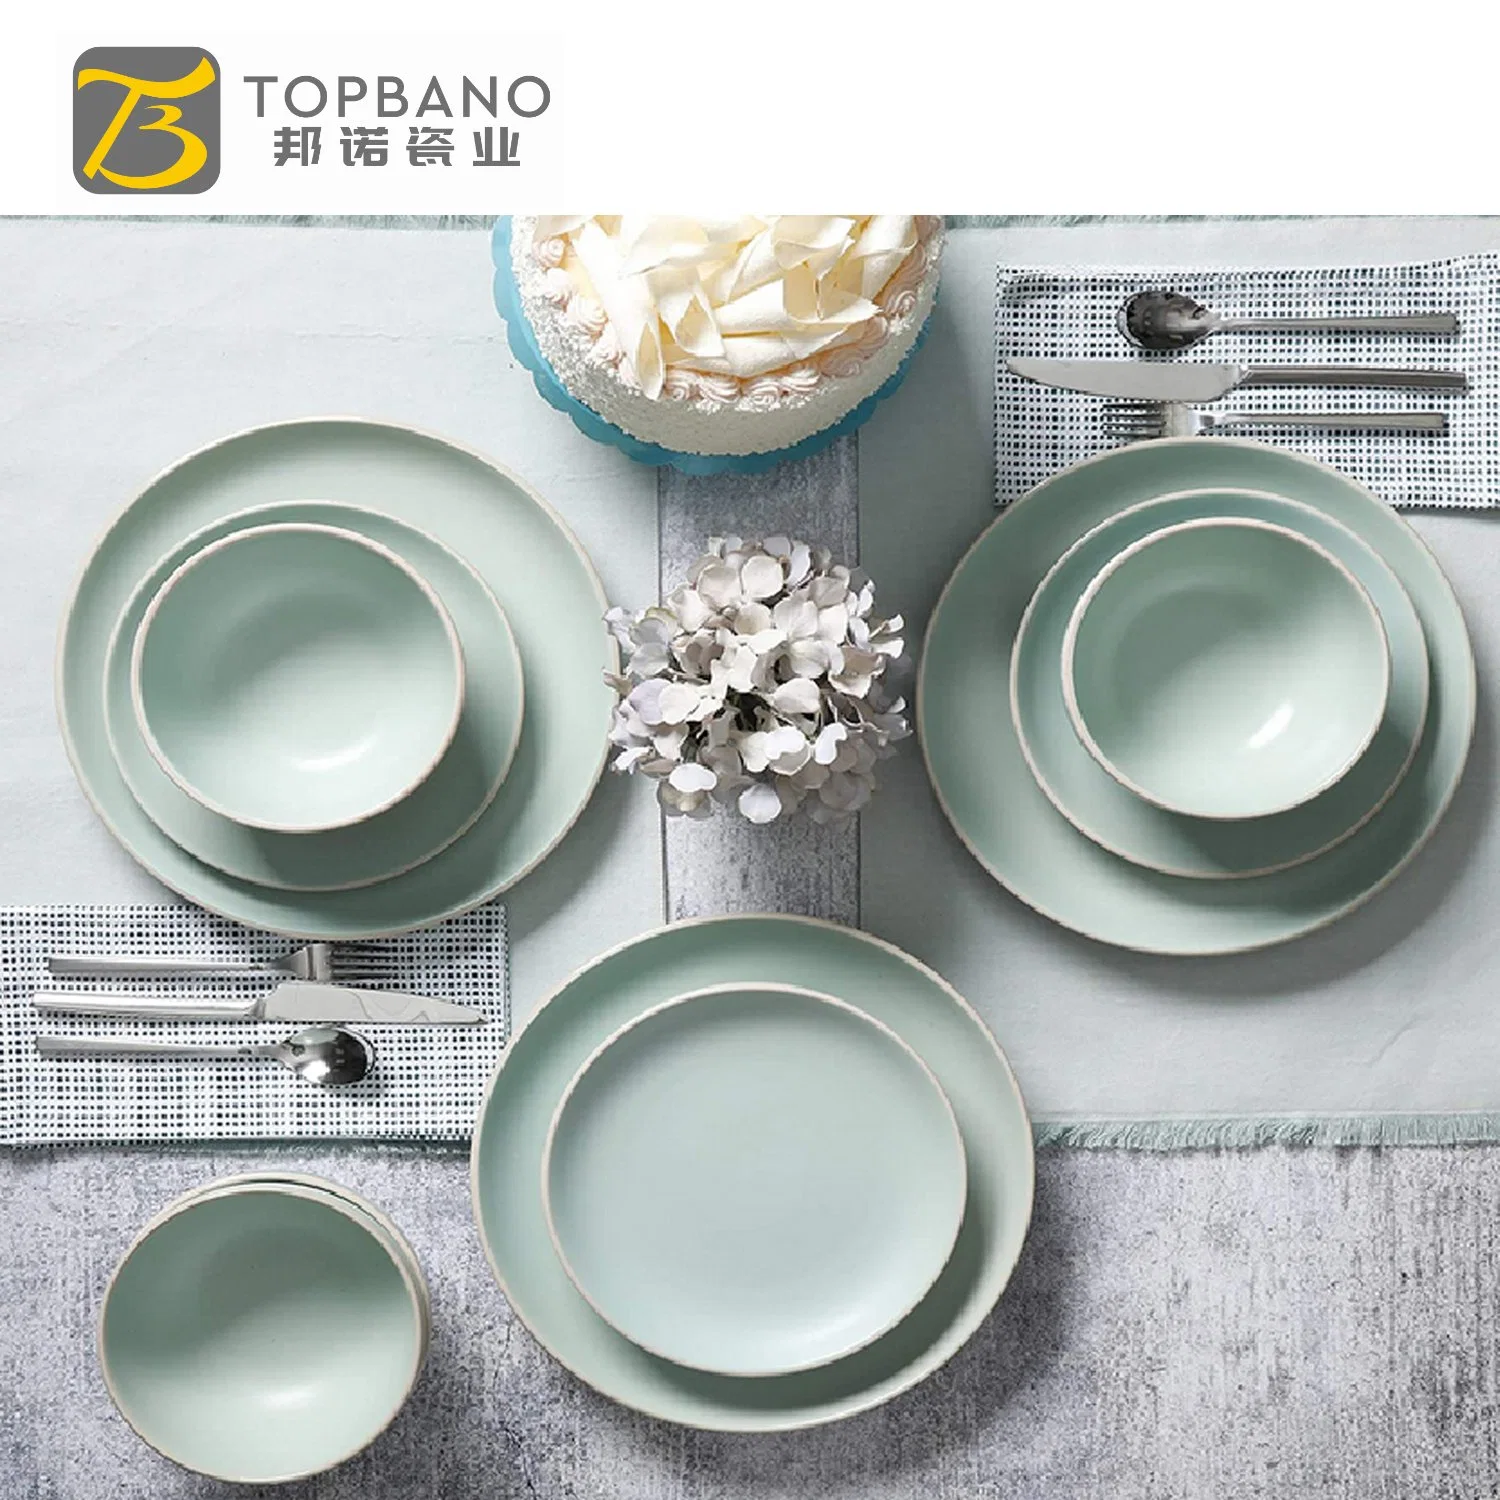 Topbano Porcelain Dinnerware Tableware Sets Wholesale Fine White Dinner Set